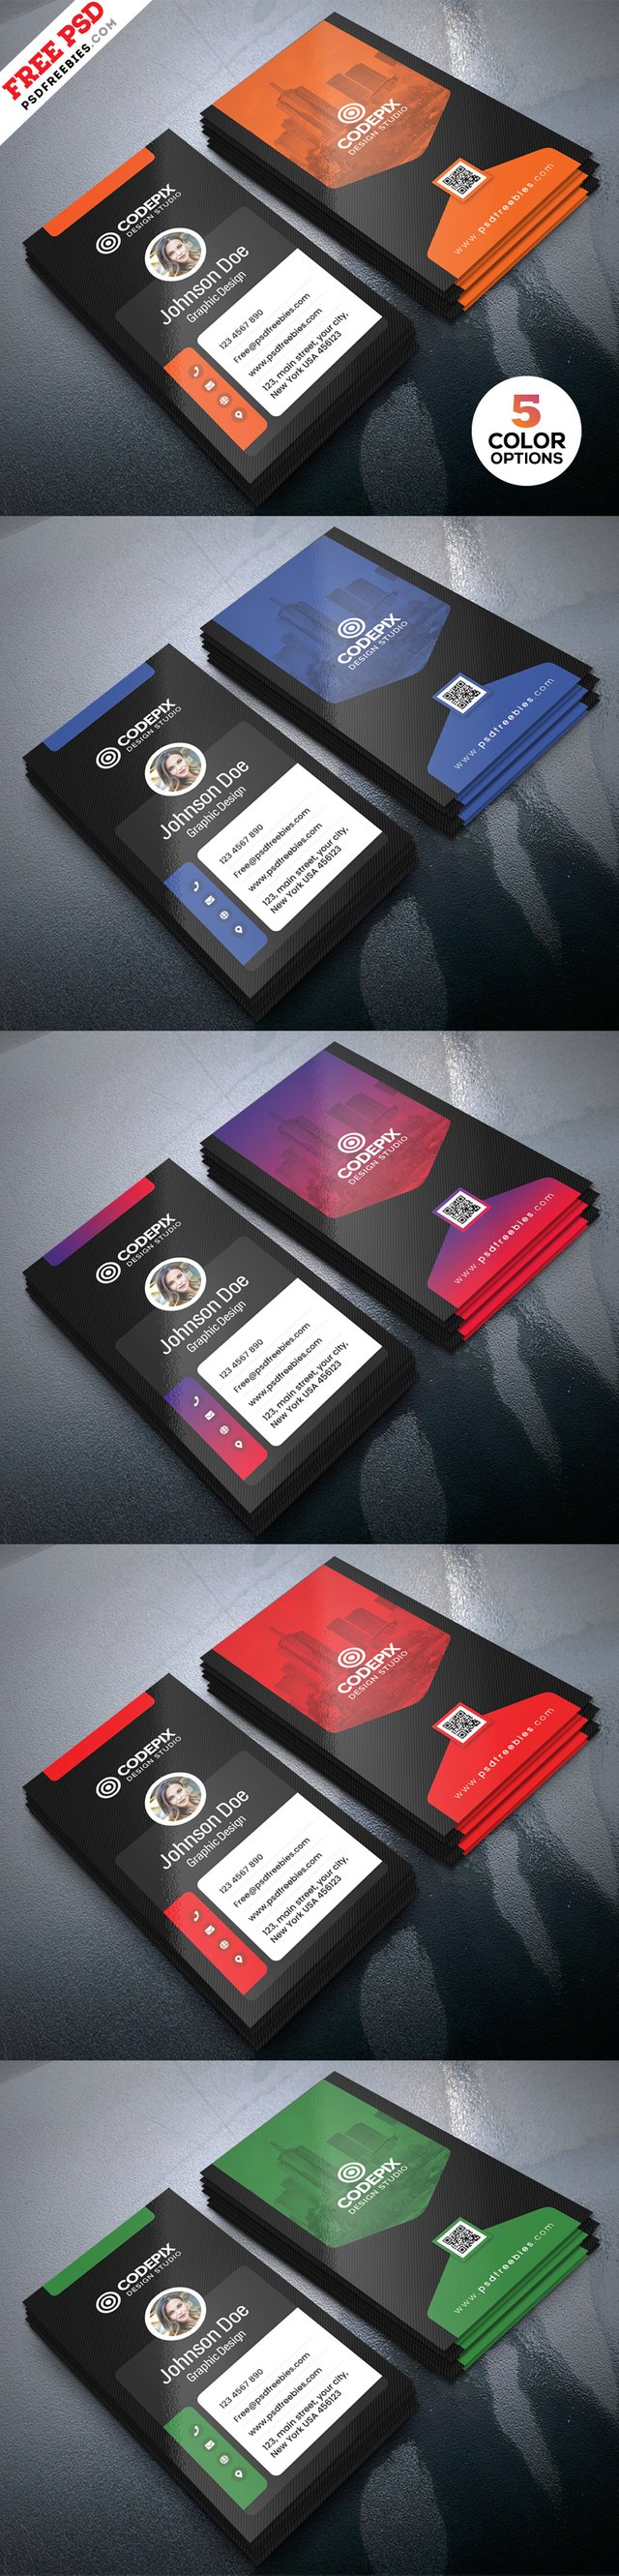 Vertical-Business-Card-Designs-PSD-Preview.jpg